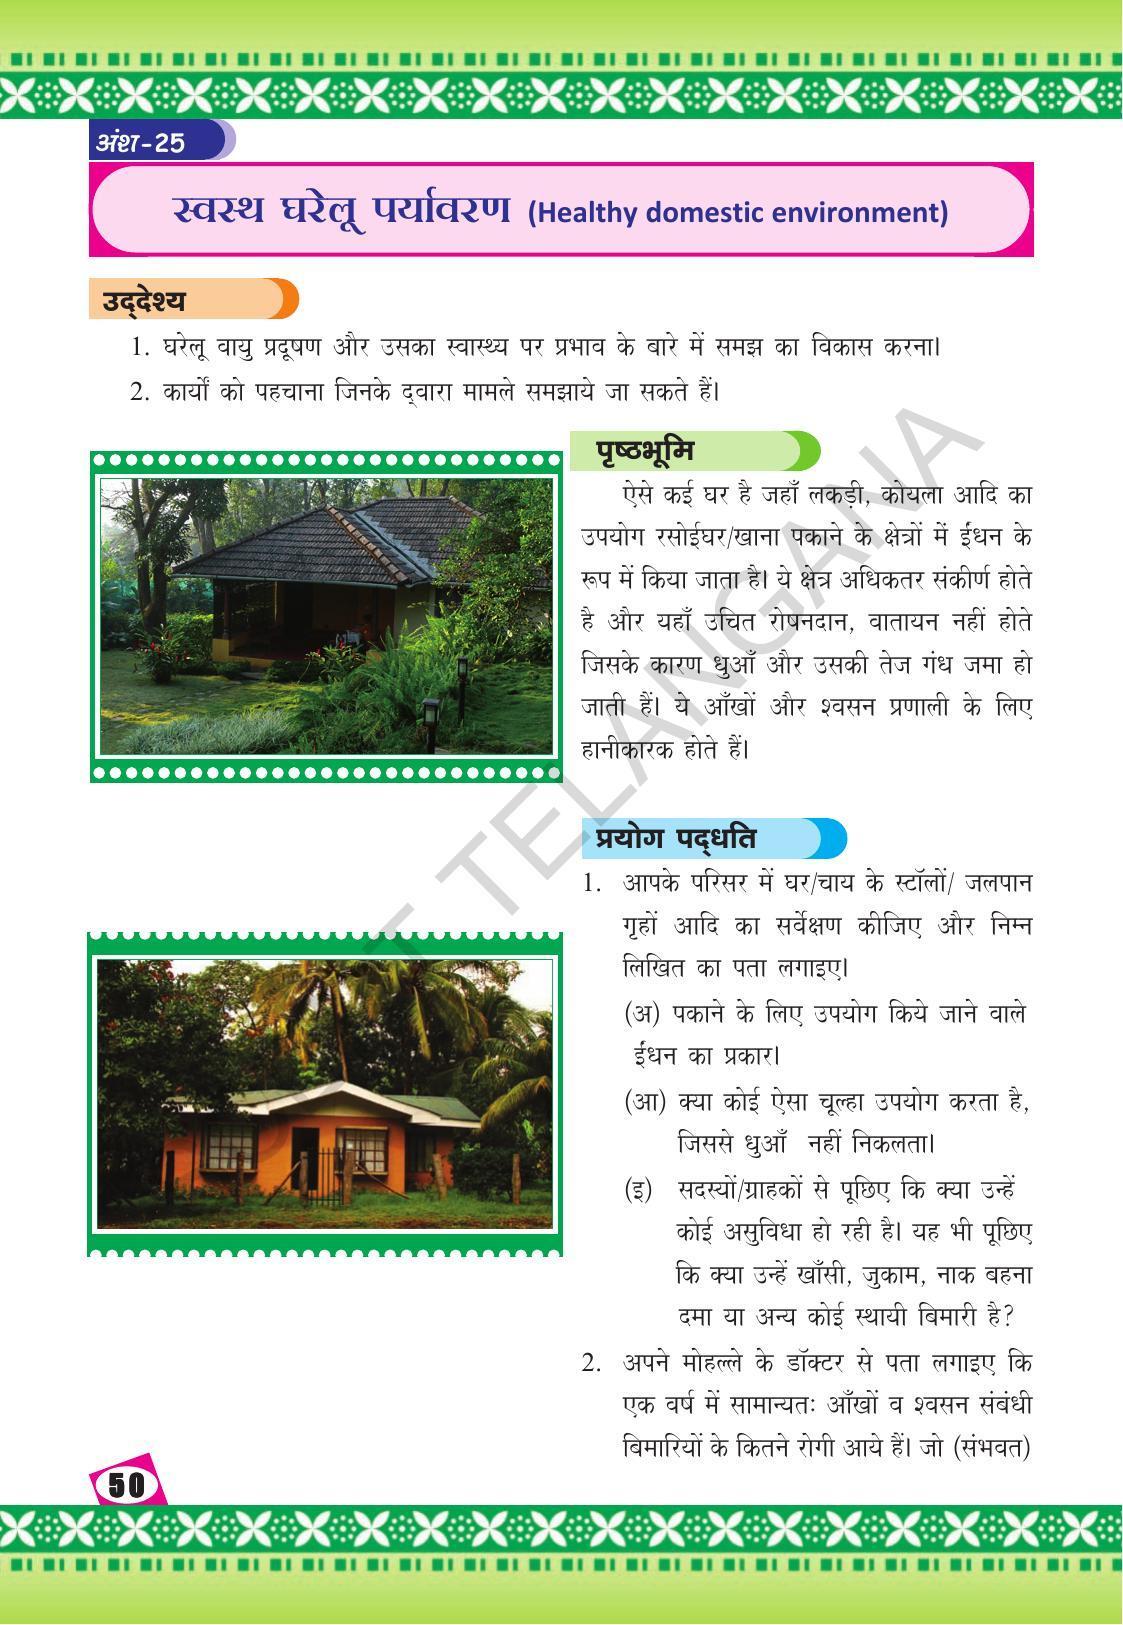 TS SCERT Class 10 Social Environmental Education (Hindi Medium) Text Book - Page 58